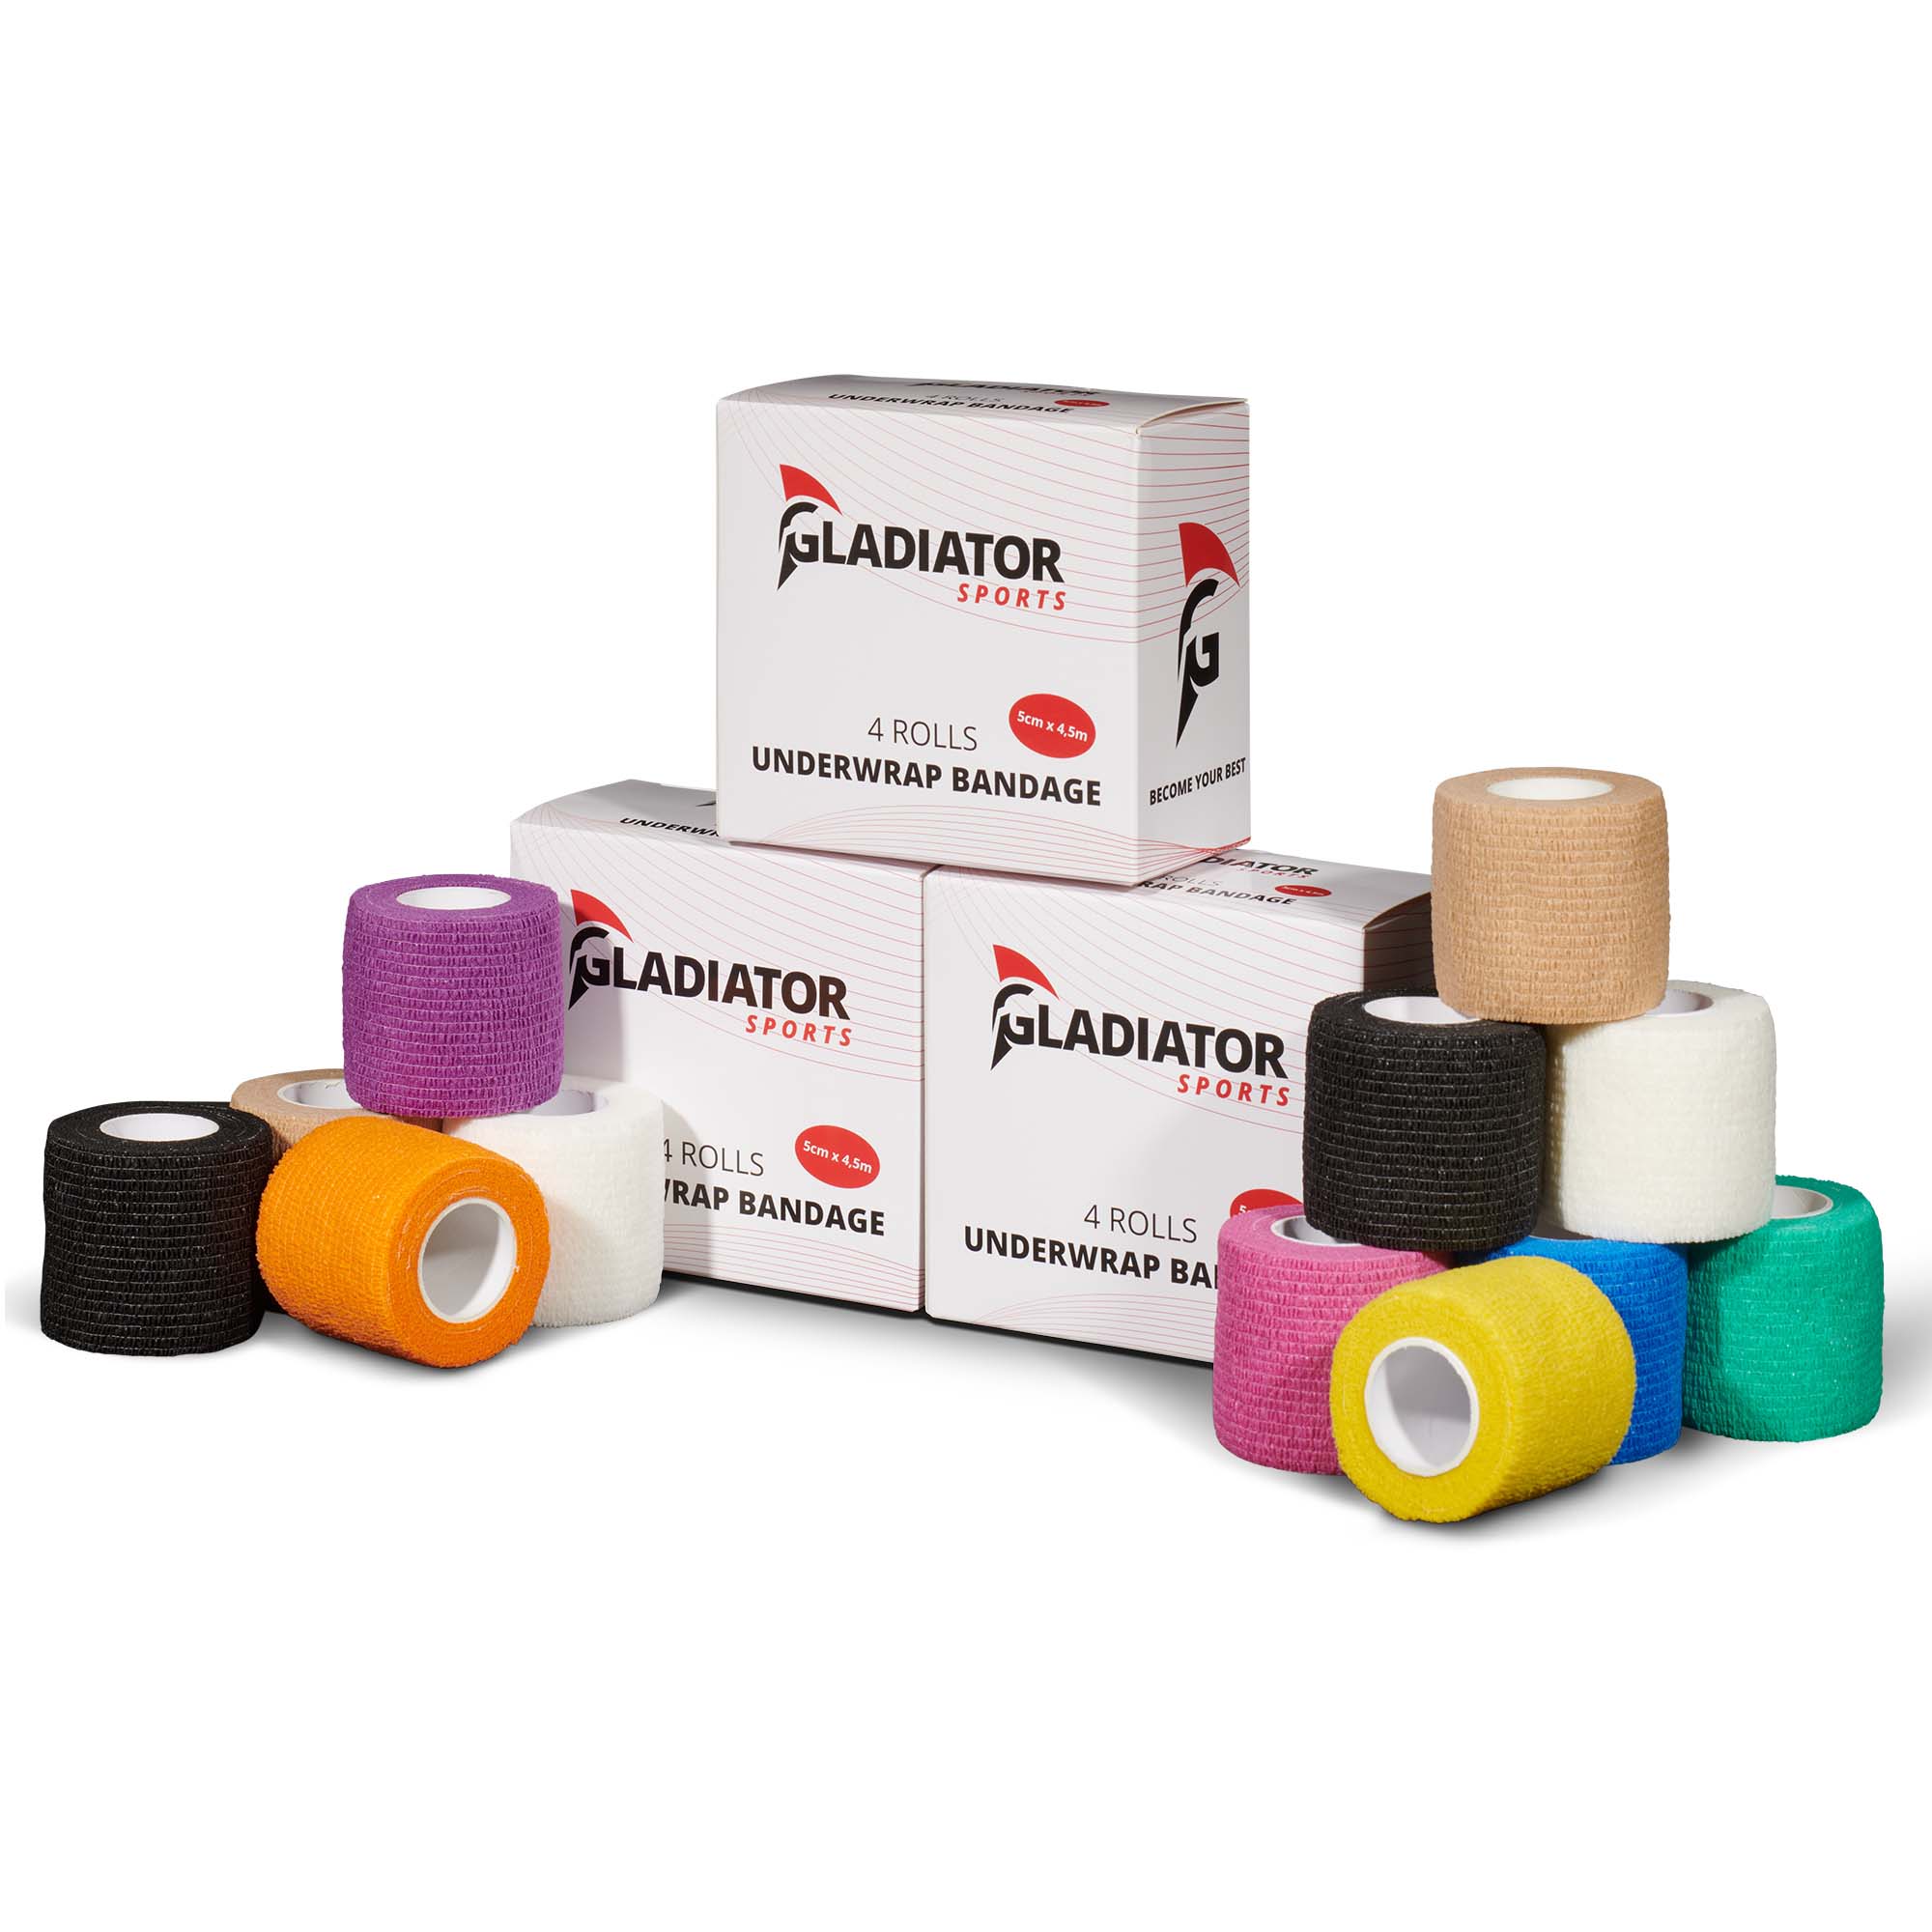 gladiator sports underwrap bandage 12 rolls with box